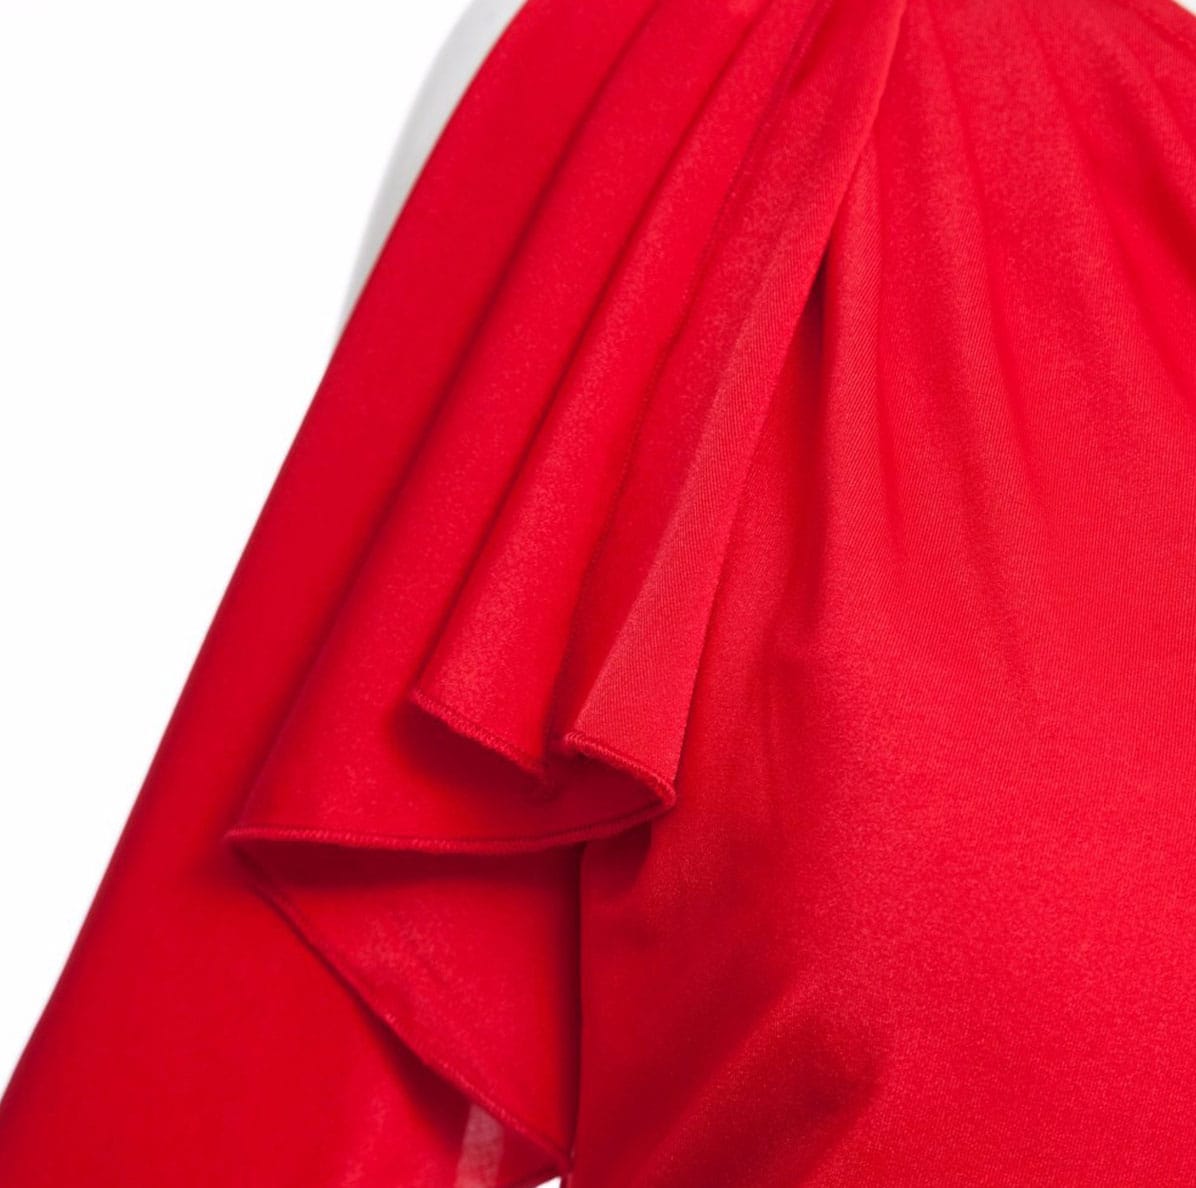 M0188 red8 Short Sleeve Dresses maureens.com boutique